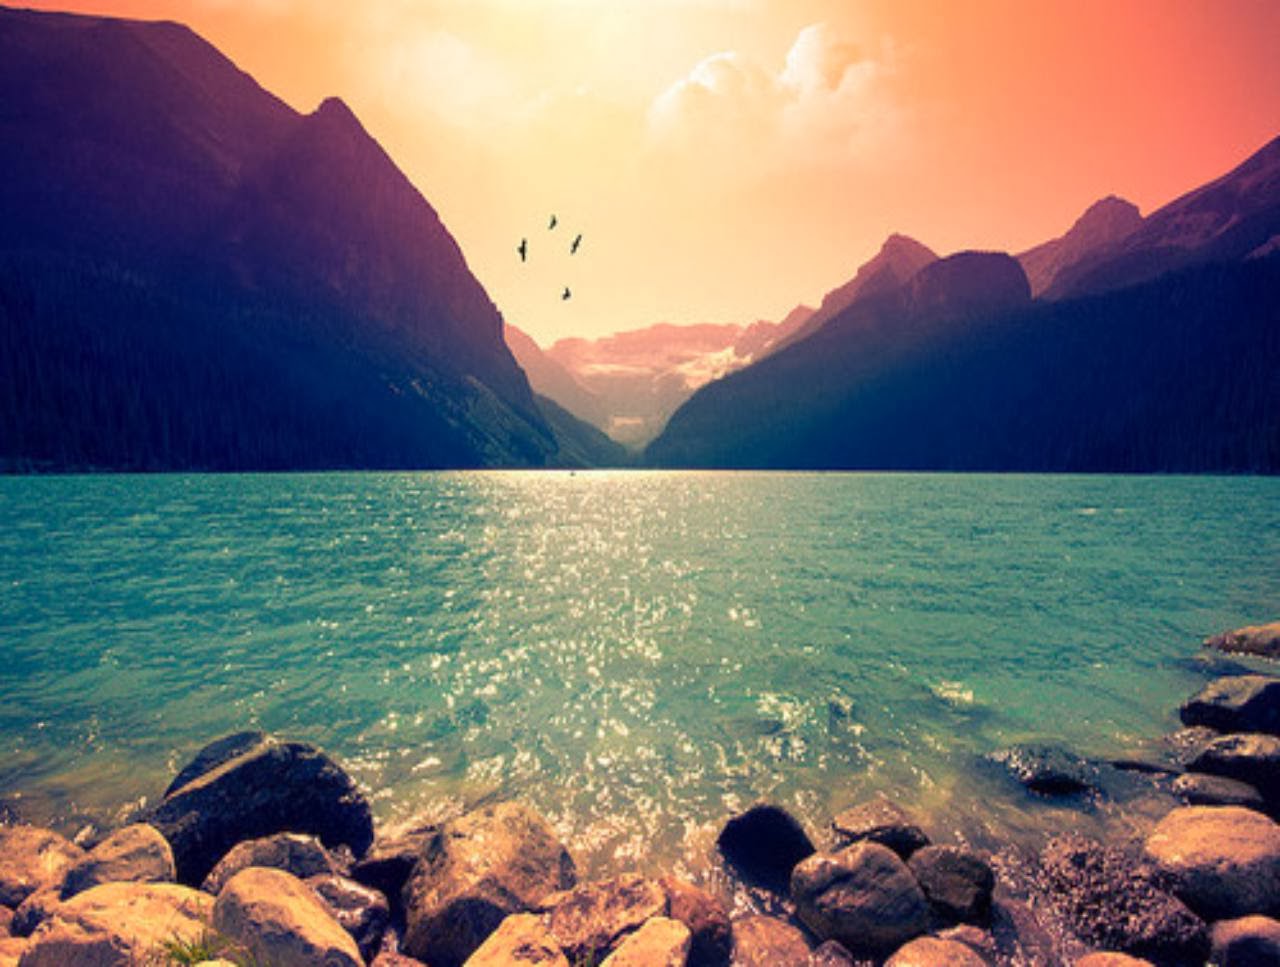 夏壁紙tumblr,空,自然,自然の風景,山,水